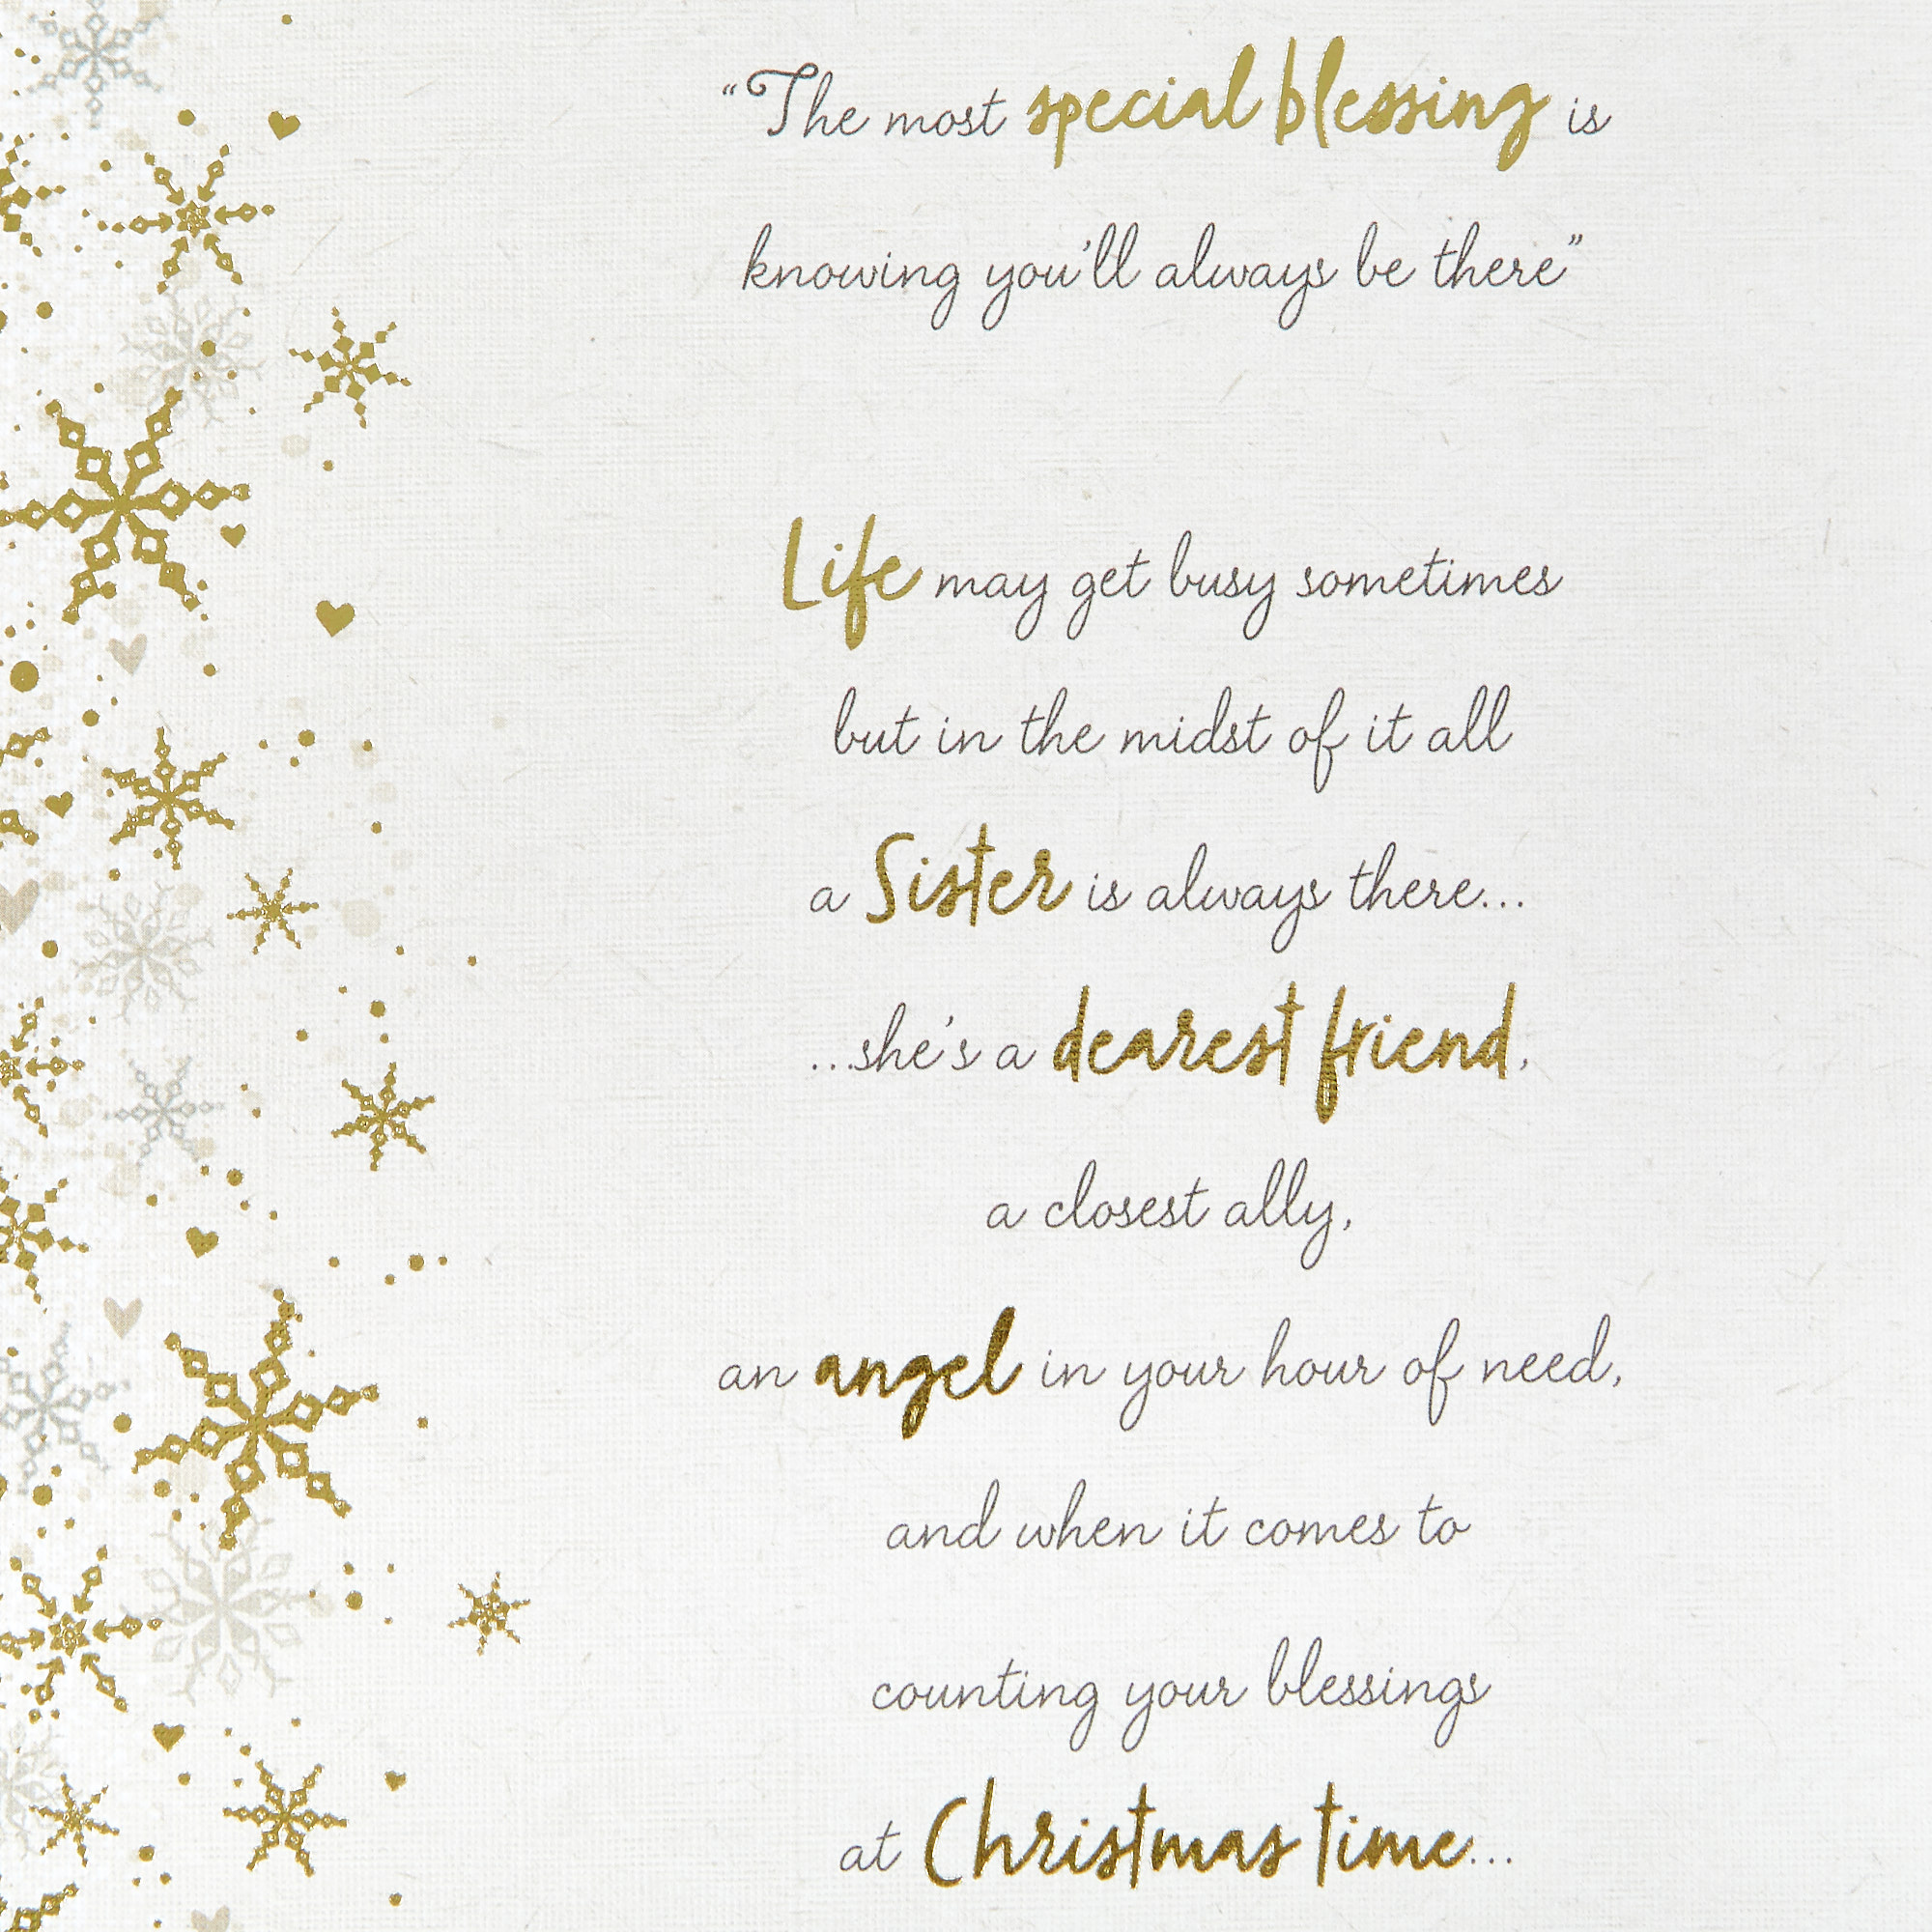 Christmas Card - Wonderful Sister, Traditional Verse